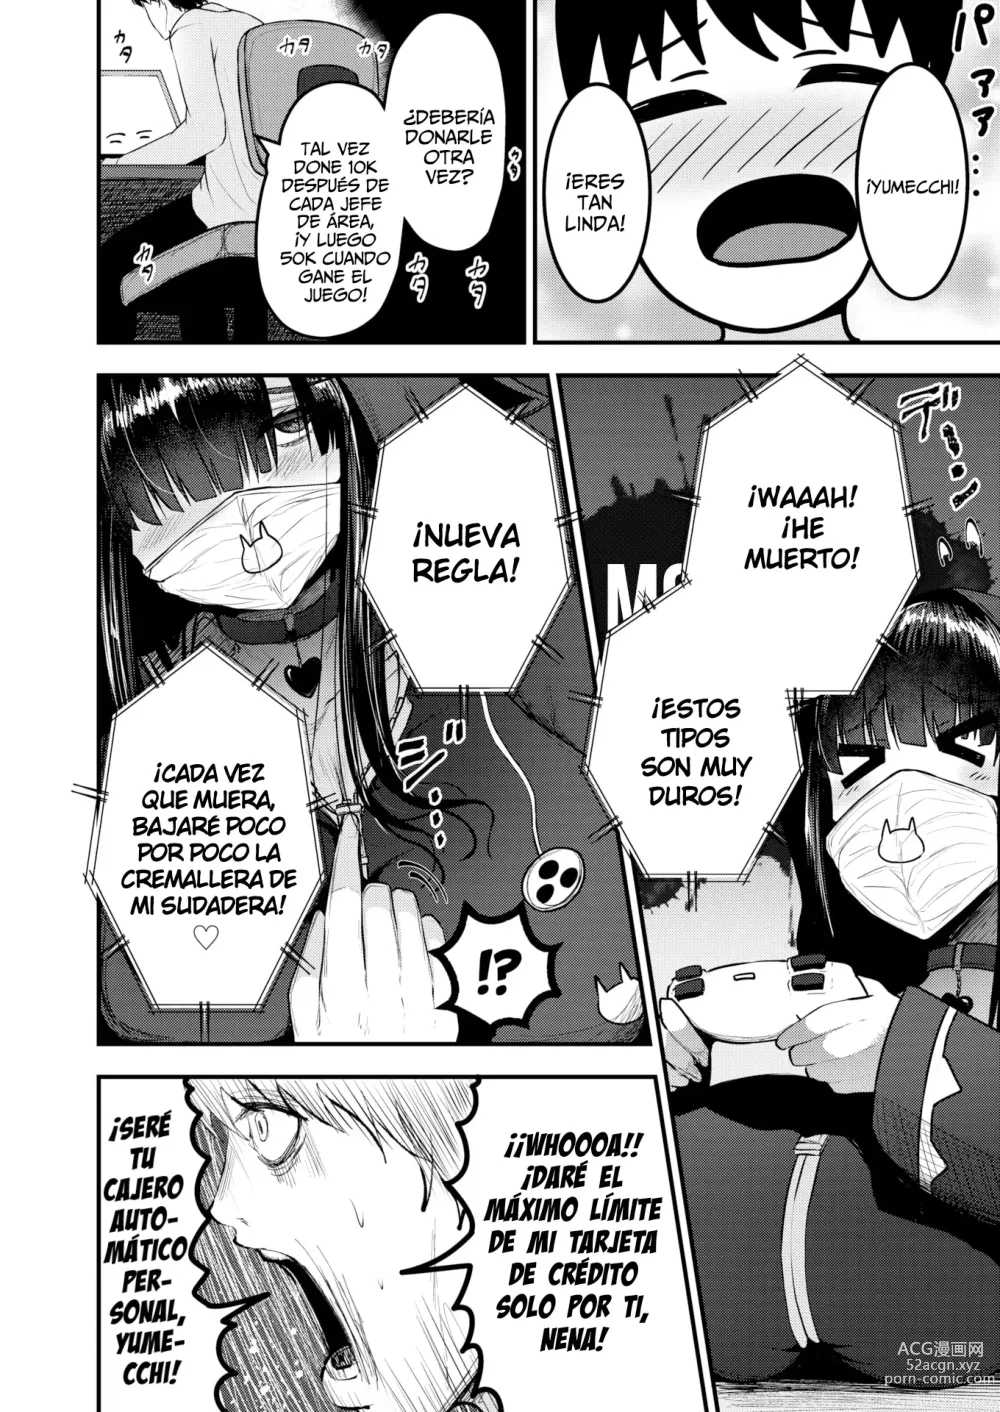 Page 2 of manga Yumecchi Livestream